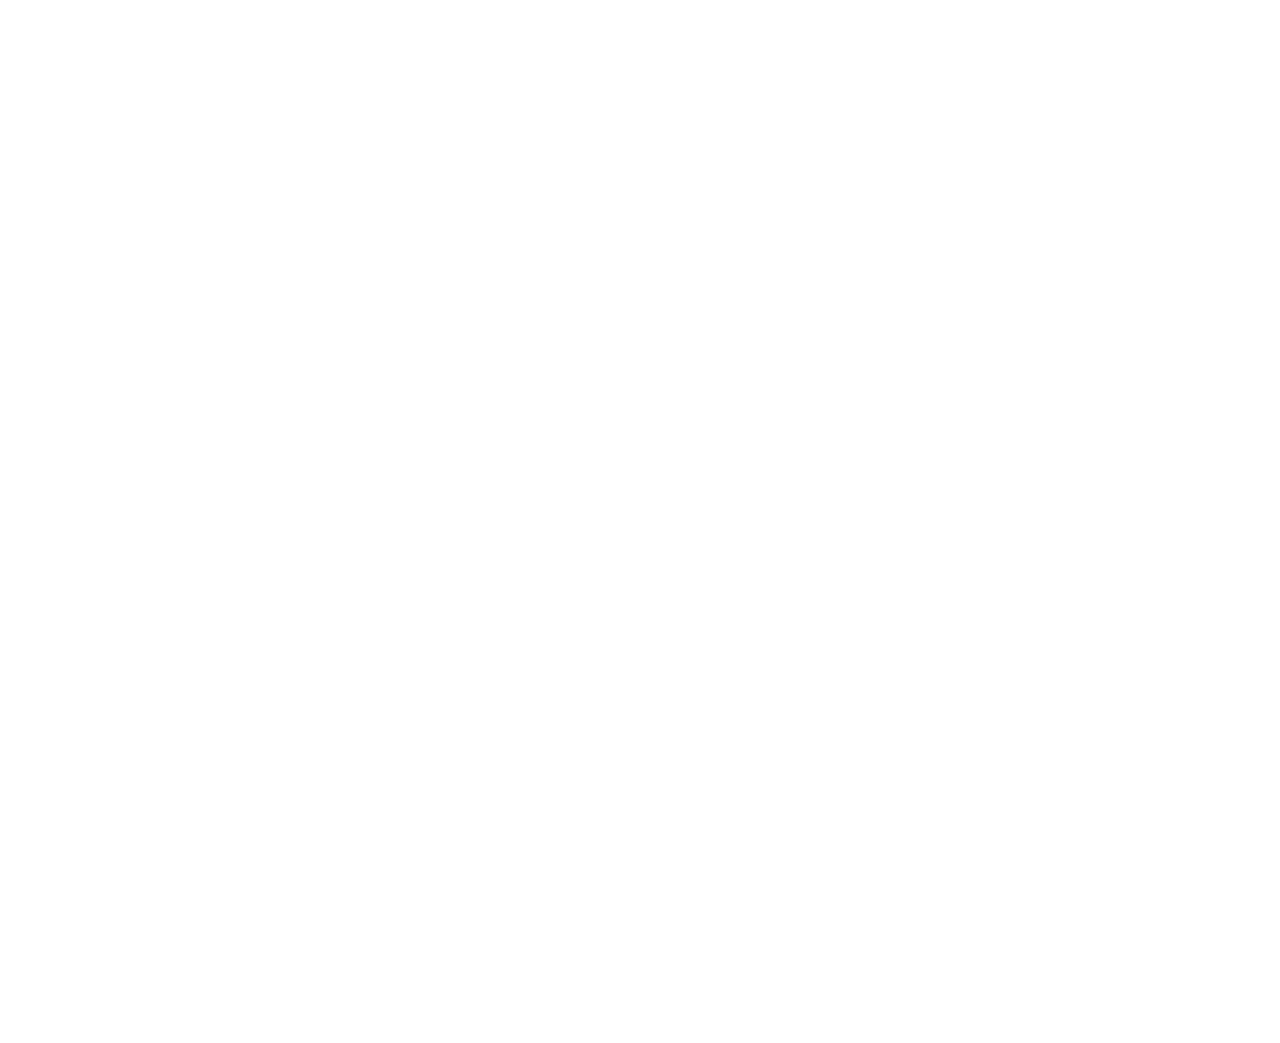 the Sugar Stone Collective's web page